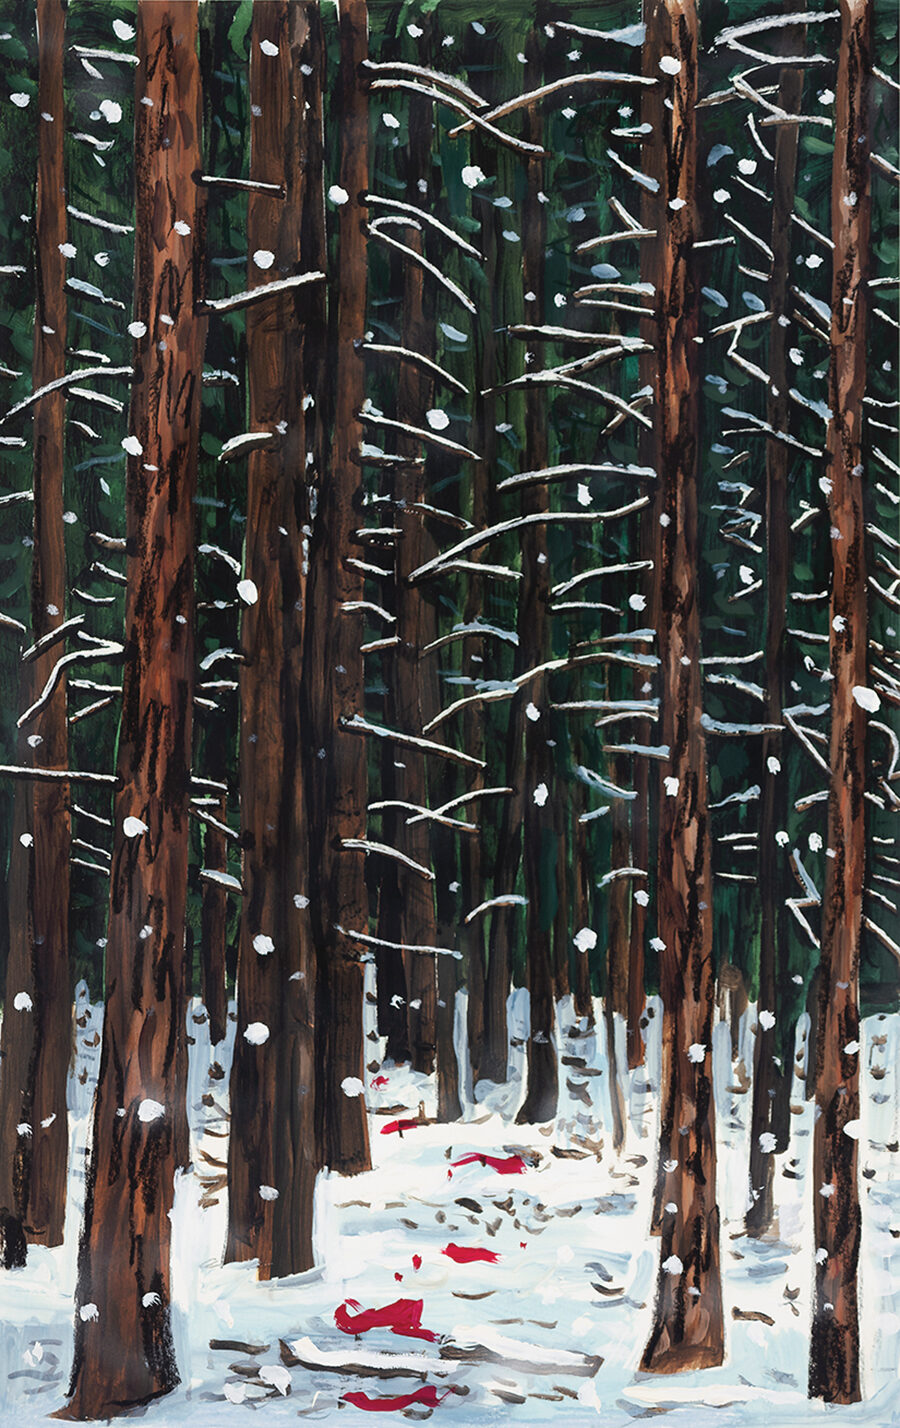 Forest with Blood, by Richard Bosman © The artist. Courtesy Pamela Salisbury Gallery, Hudson, New York